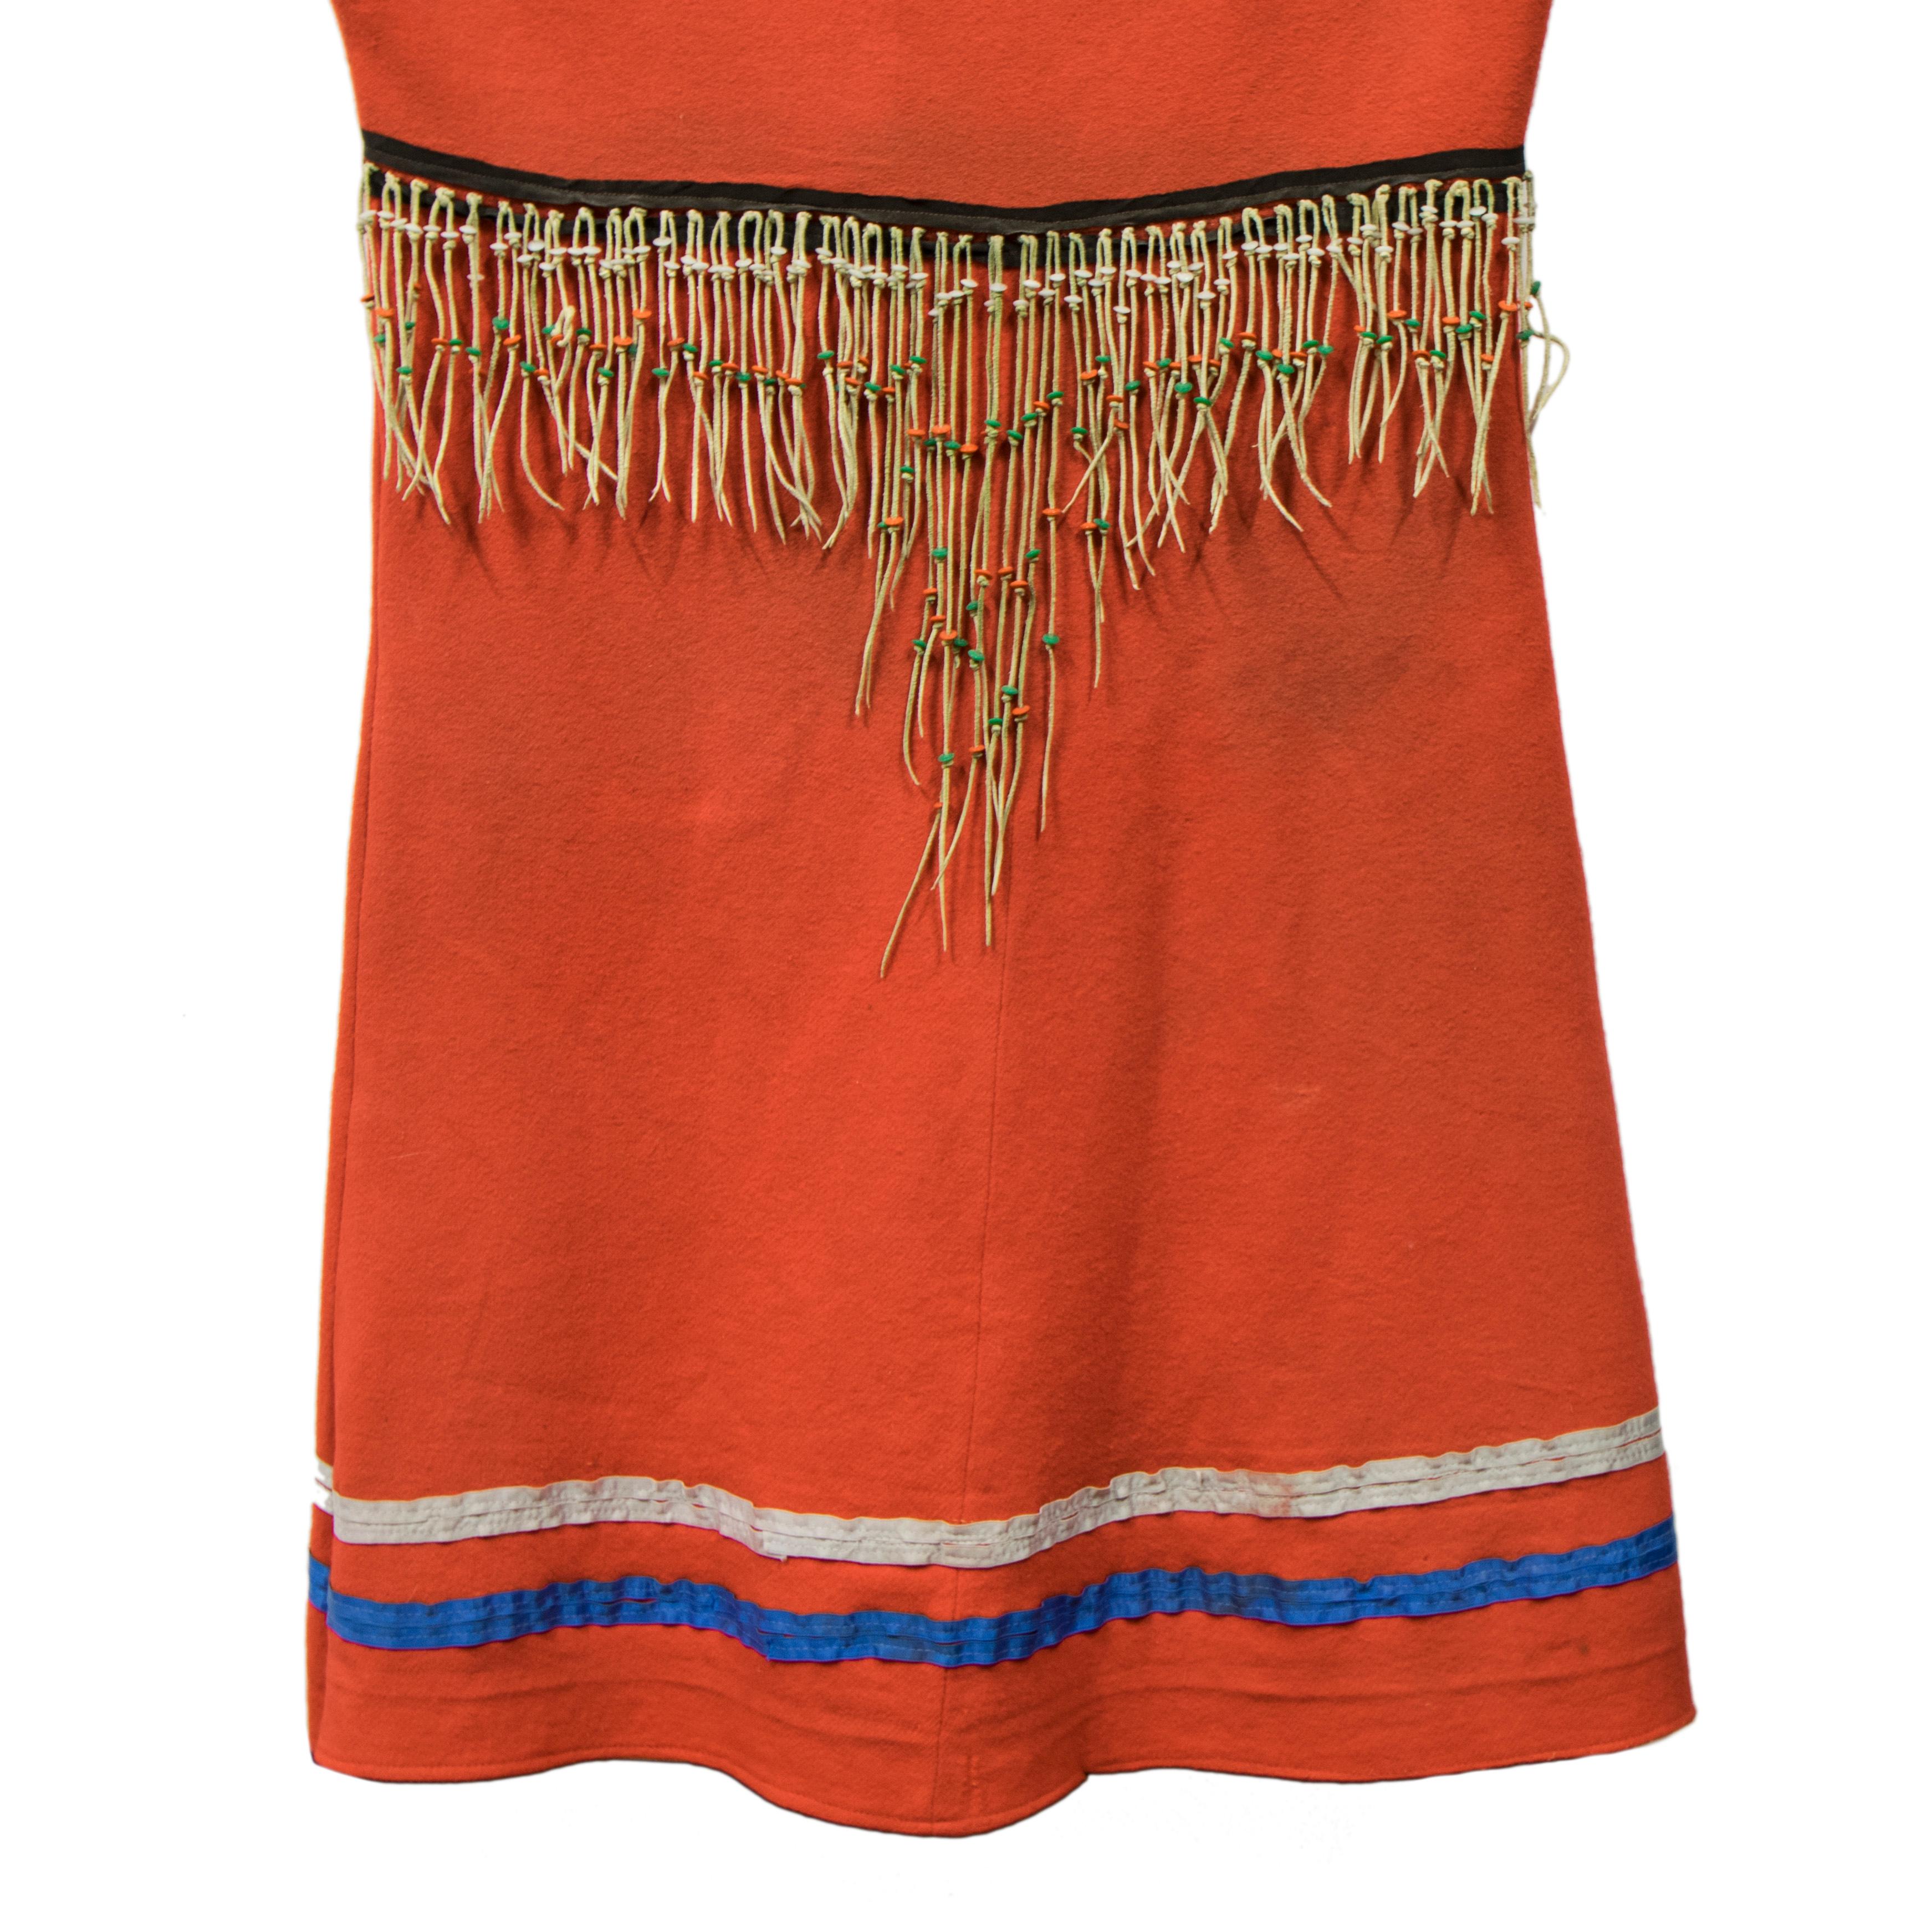 blackfoot tribe clothes